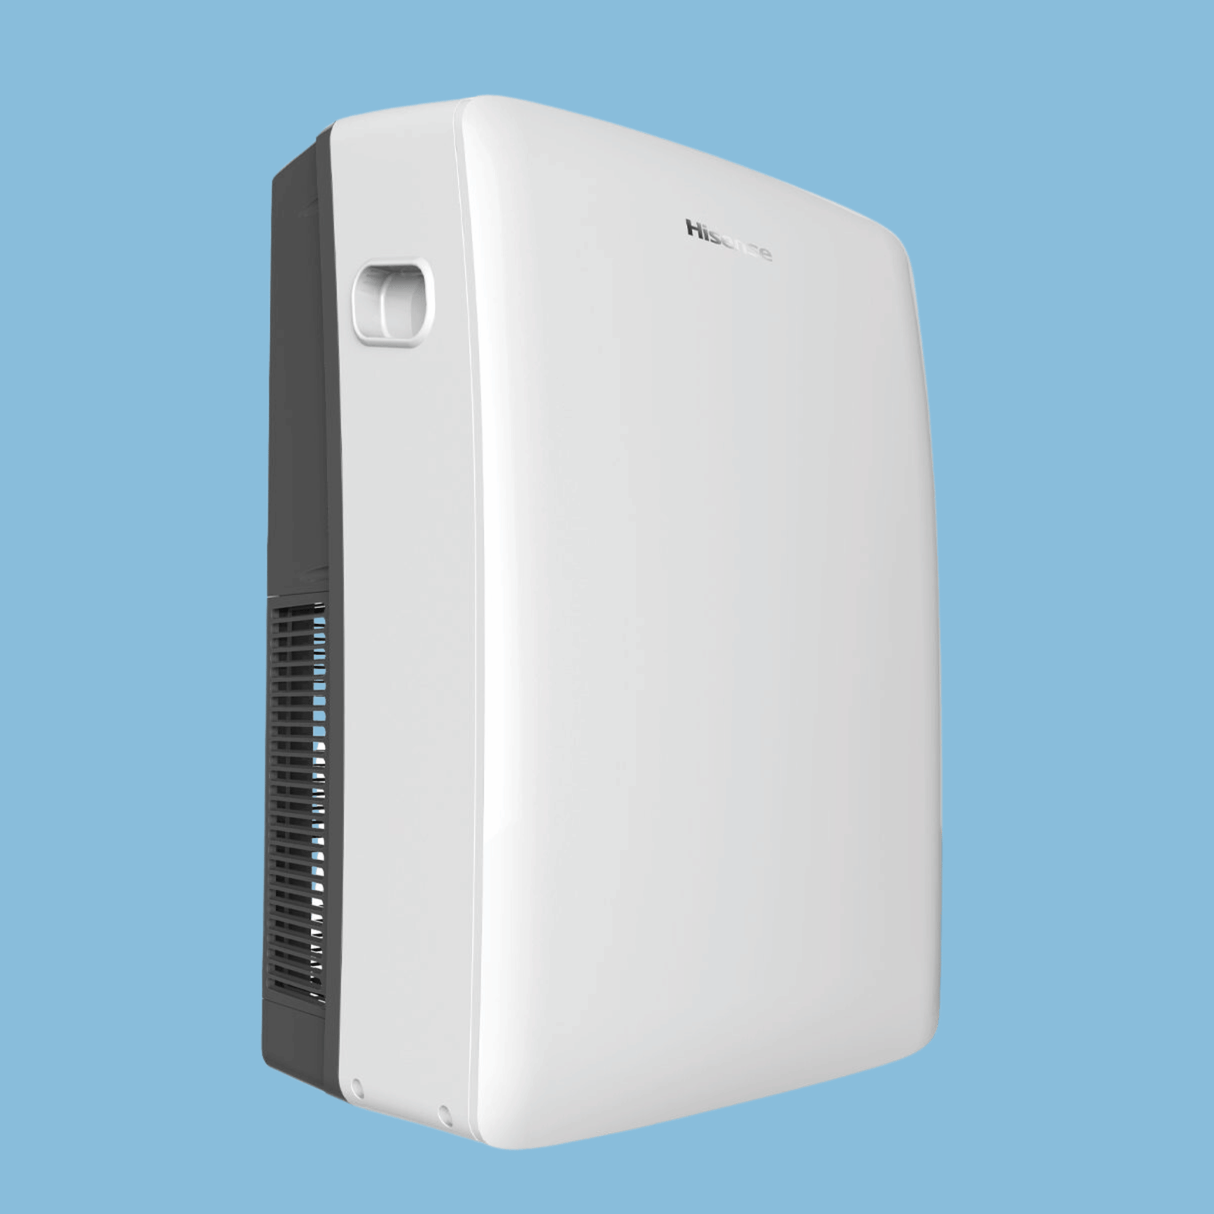 Hisense 12000 BTU Portable Air Conditioner, has Indpendent dehumidifier, user-friendly control and display - AP-12HR4SEJS00